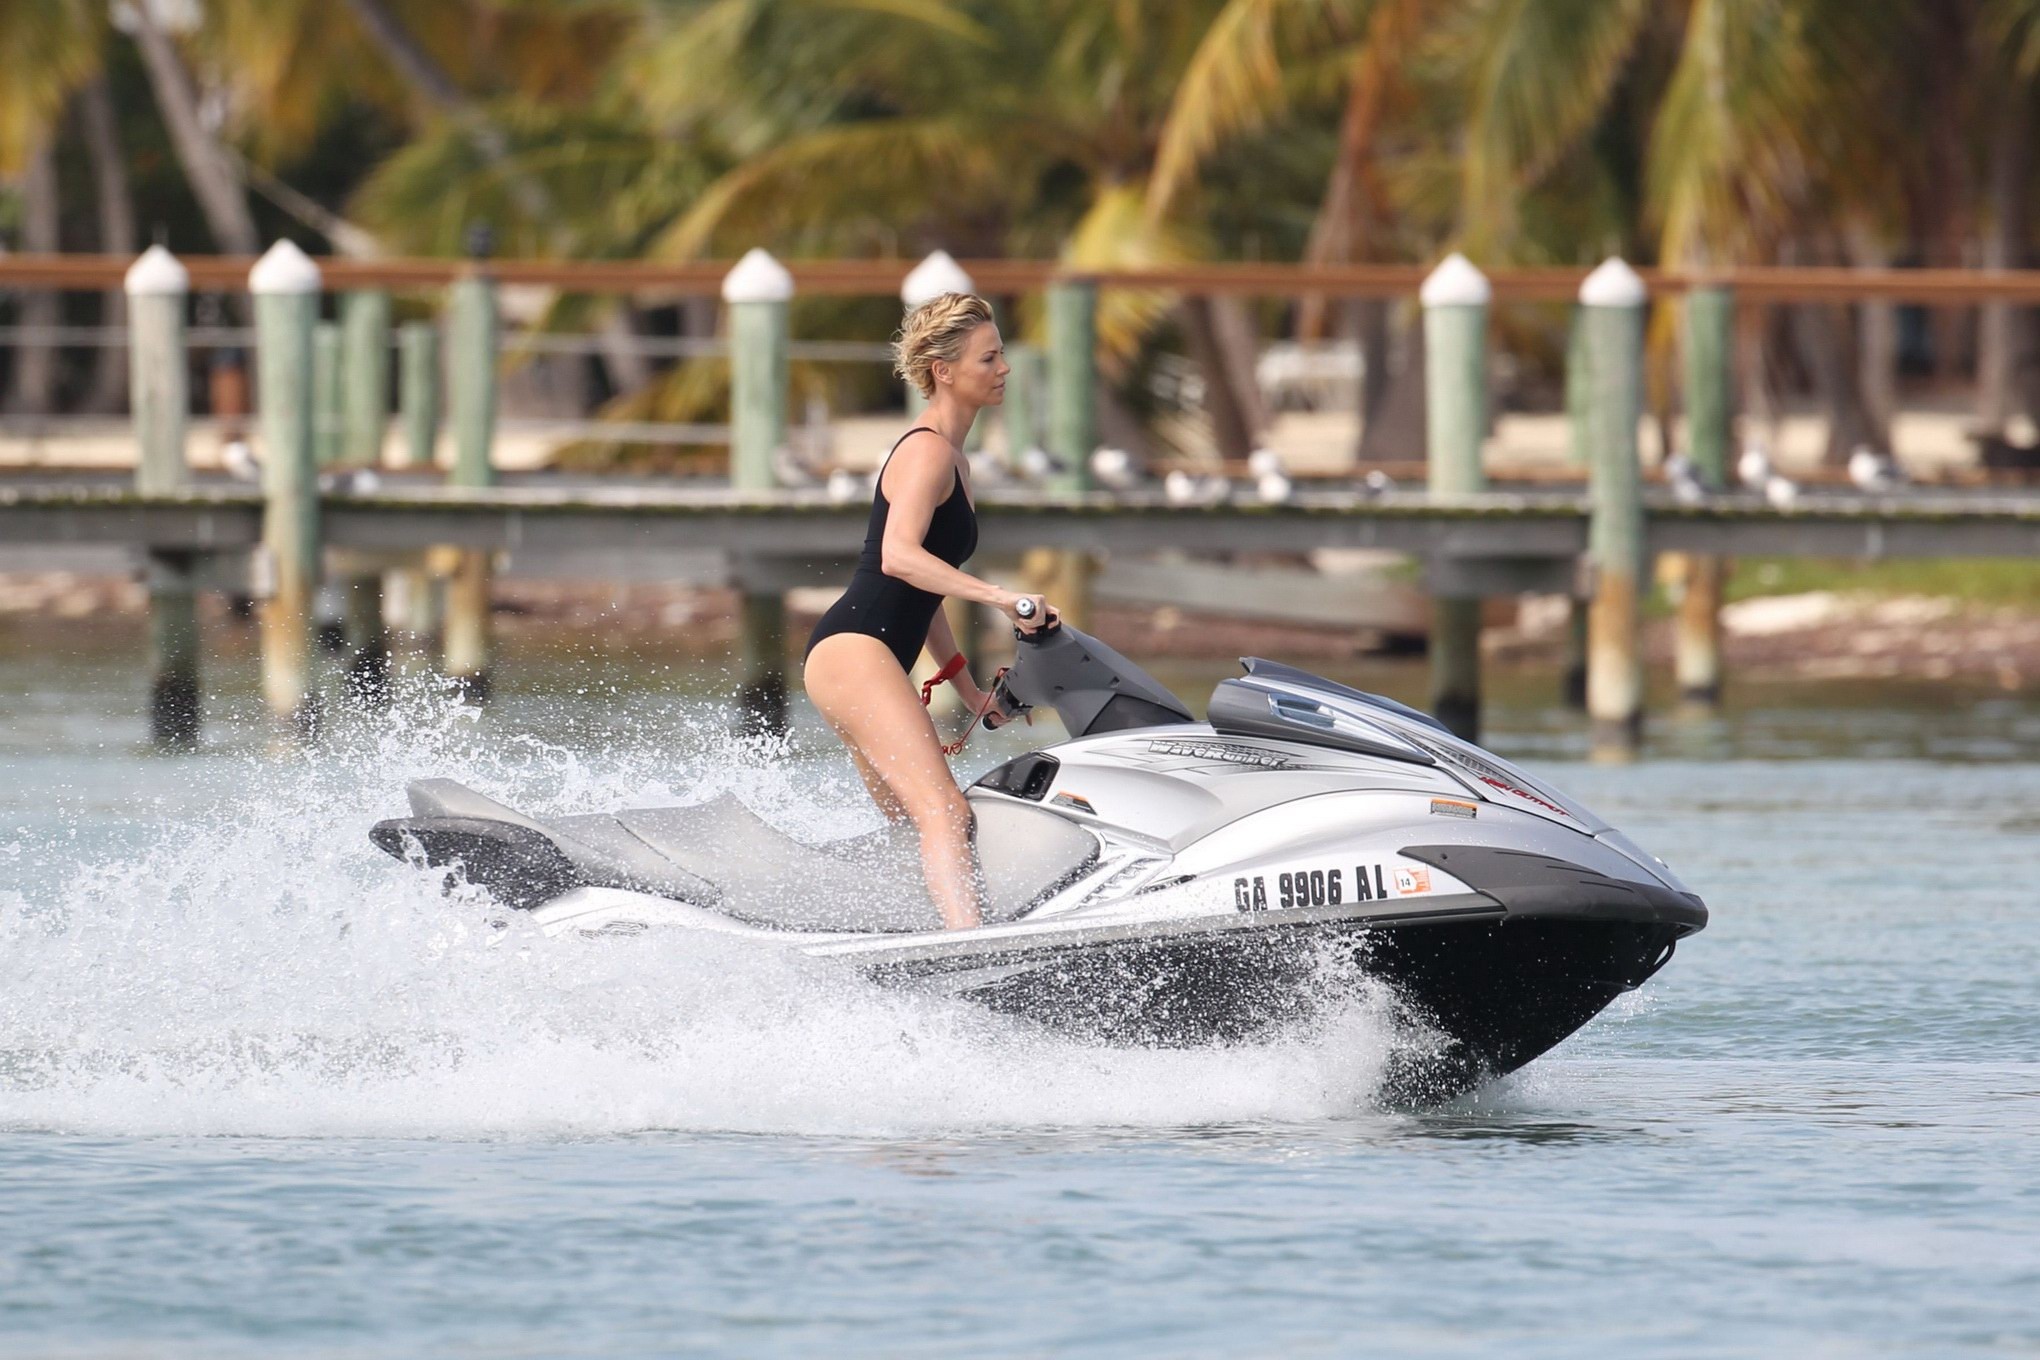 Charlize theron jet skiing in schwarzem monokini während des photoshoot in miami beac
 #75201303